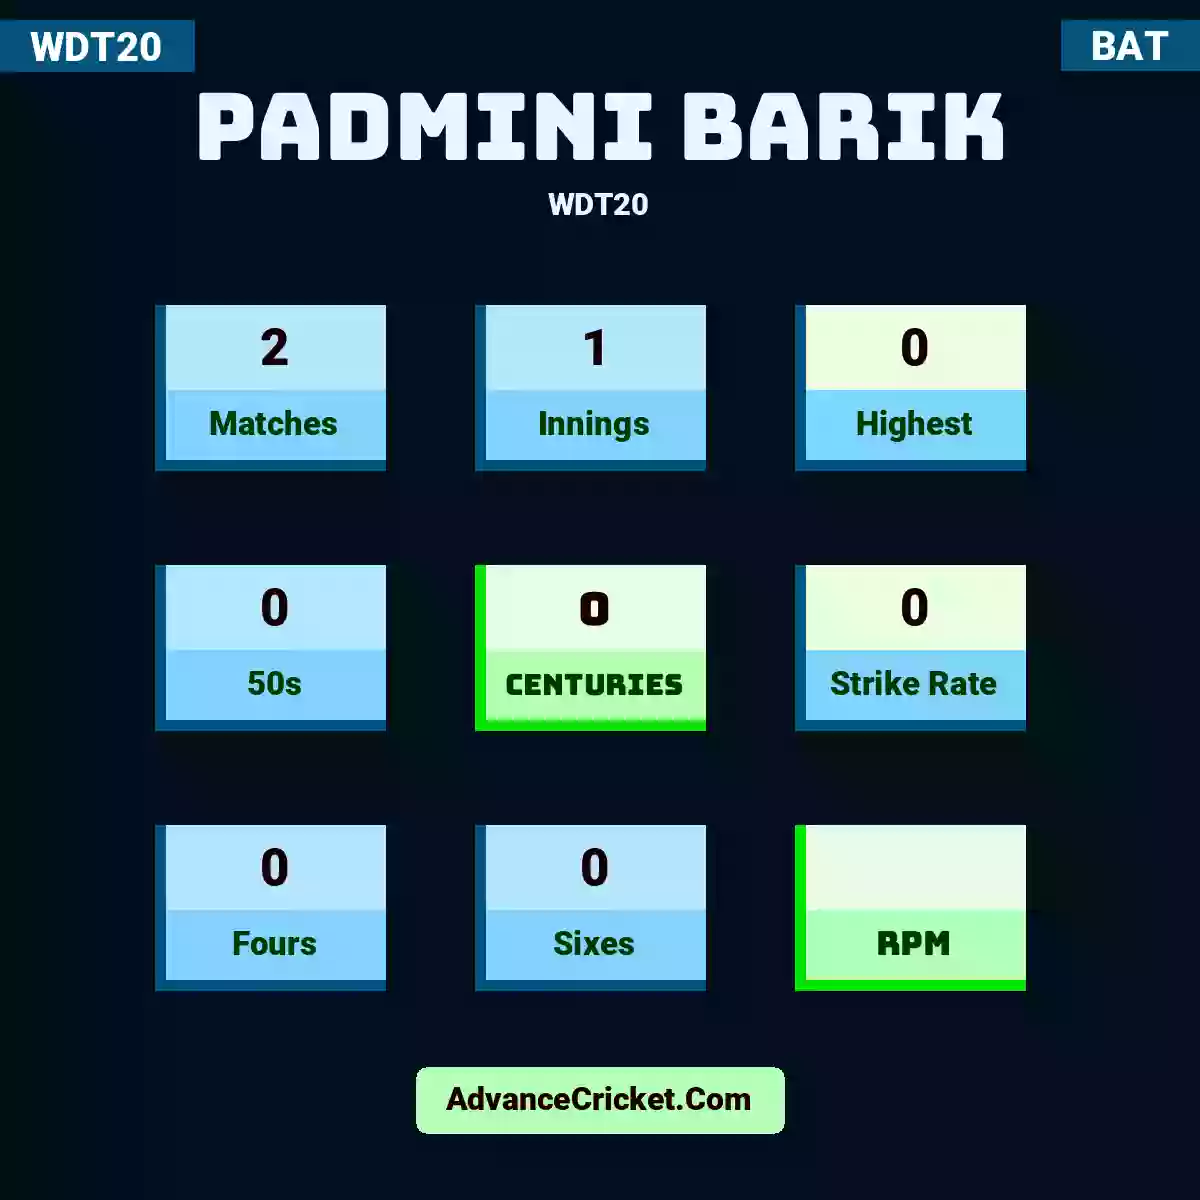 Padmini Barik WDT20 , Padmini Barik played 2 matches, scored 0 runs as highest, 0 half-centuries, and 0 centuries, with a strike rate of 0. P.Barik hit 0 fours and 0 sixes.